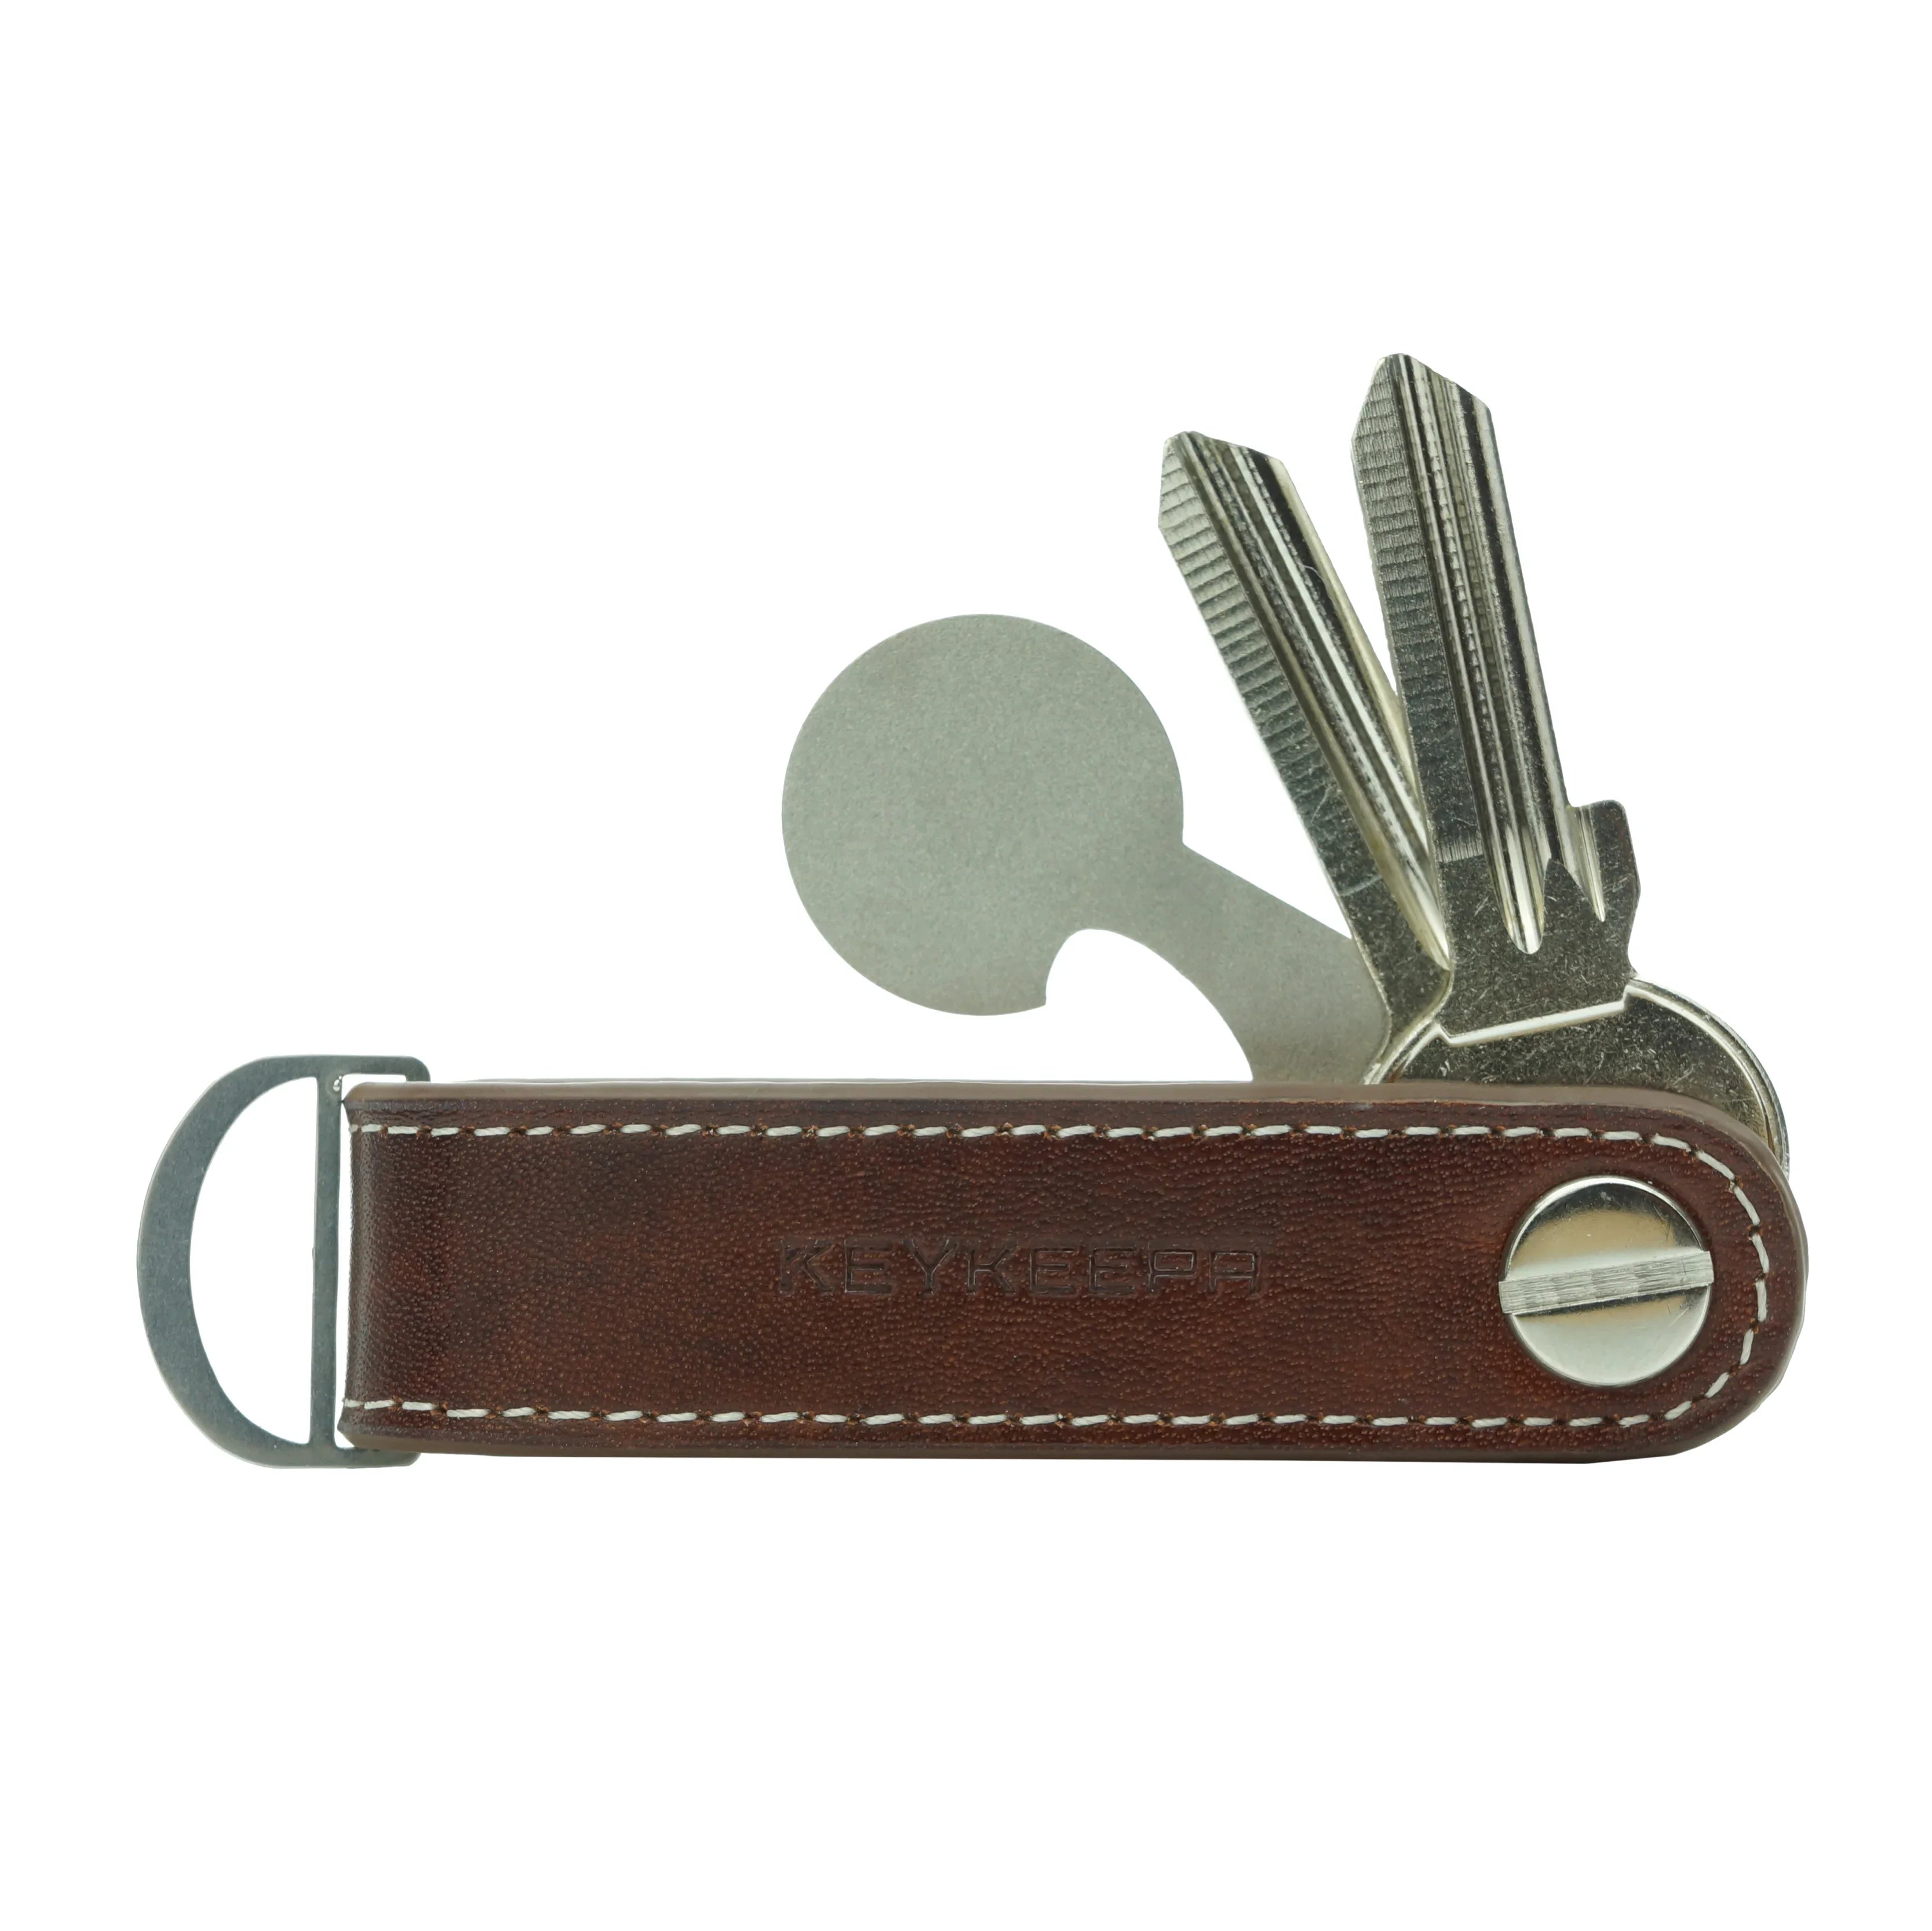 Keykeepa Loop key organizer - bonaire